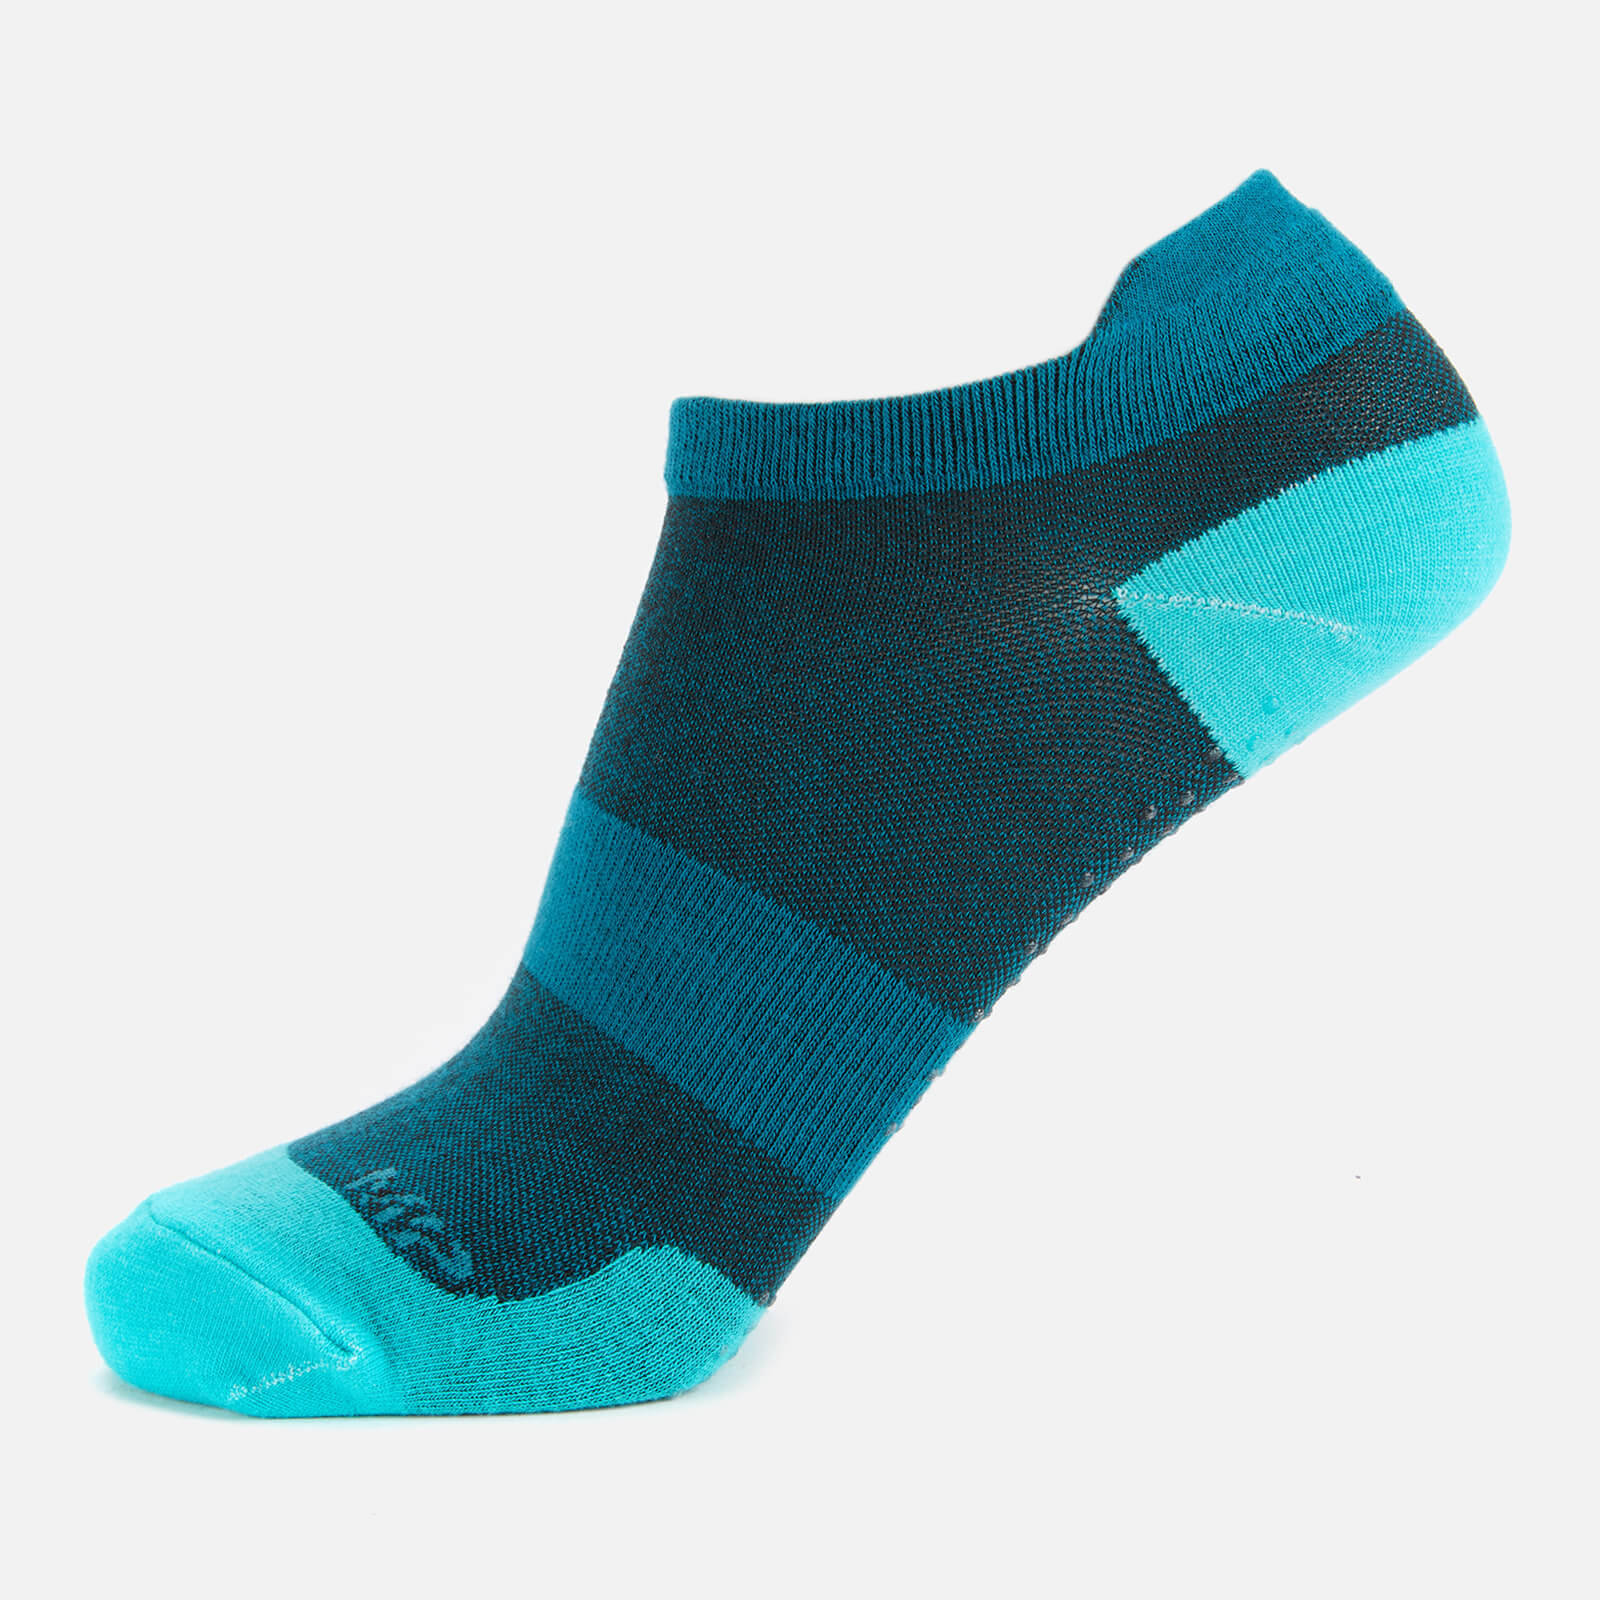 Composure Yoga Socks - Deep Lake - UK 3-6